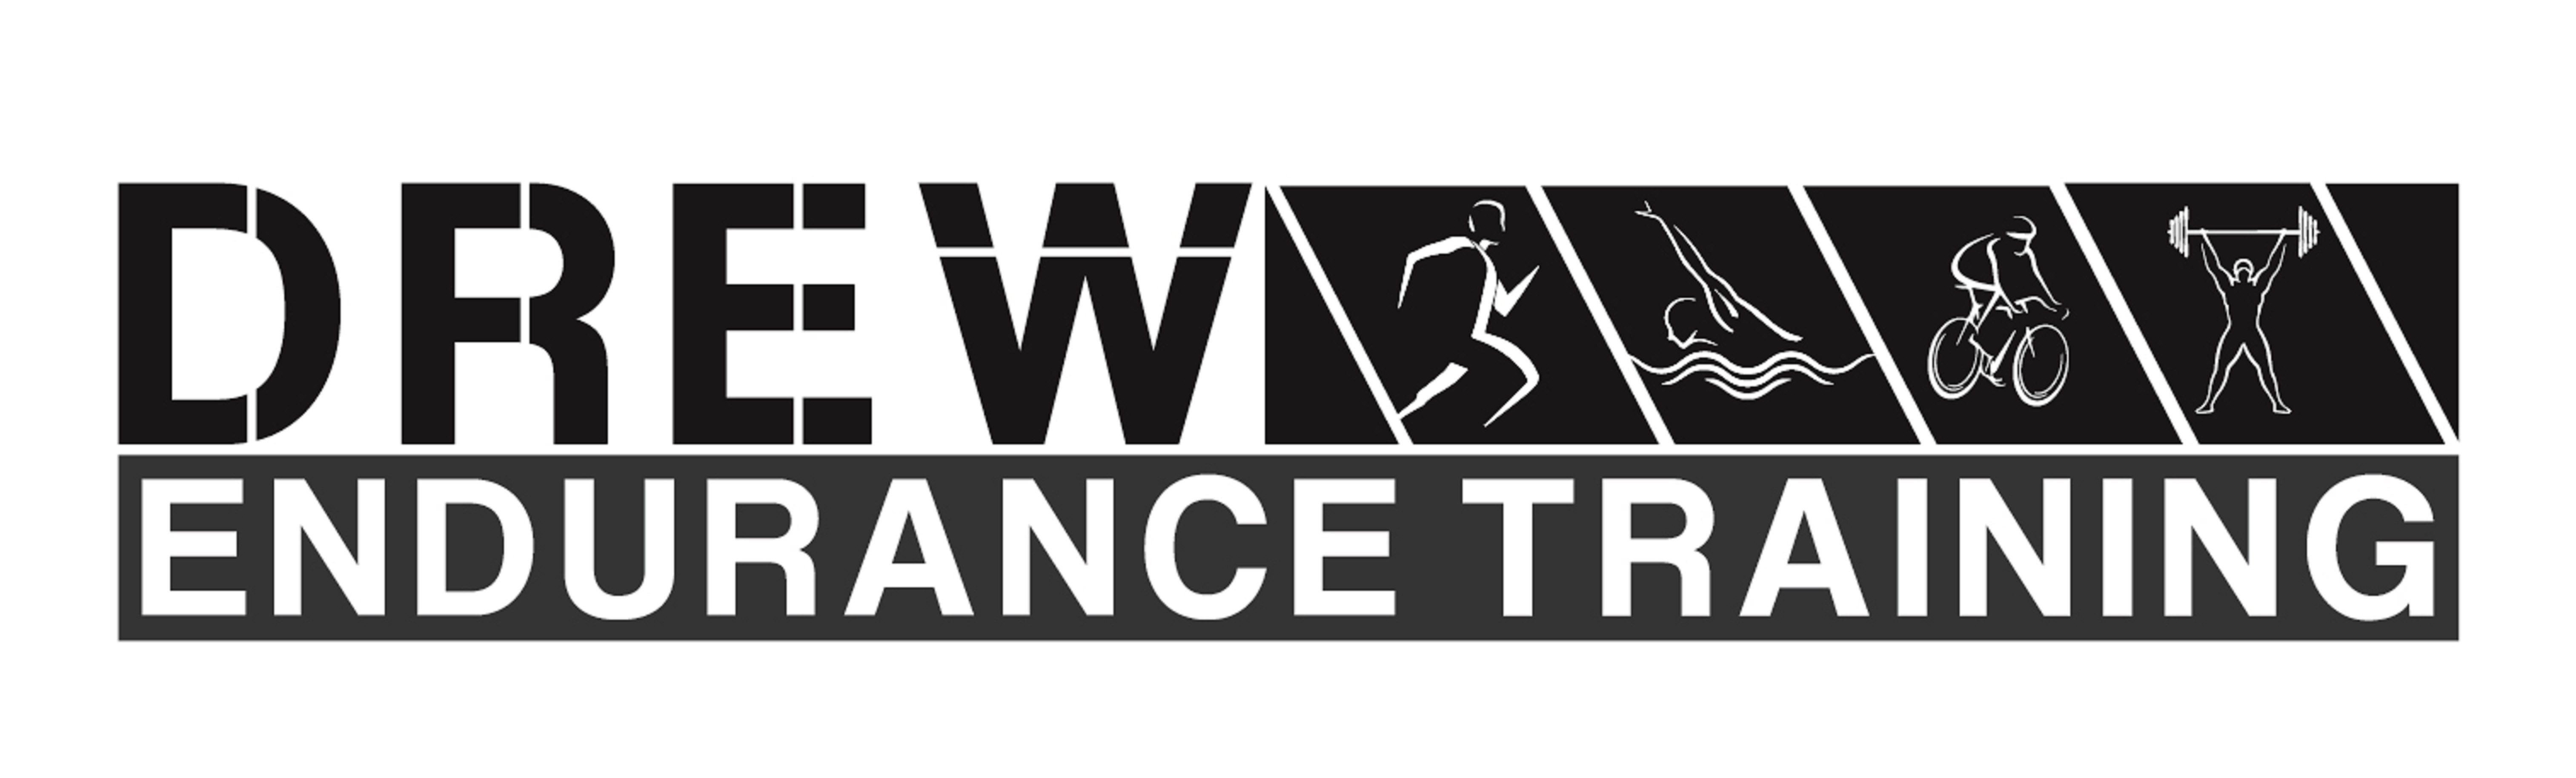 Endurance Logo - Drew endurance logo. Southampton University Triathlon Club